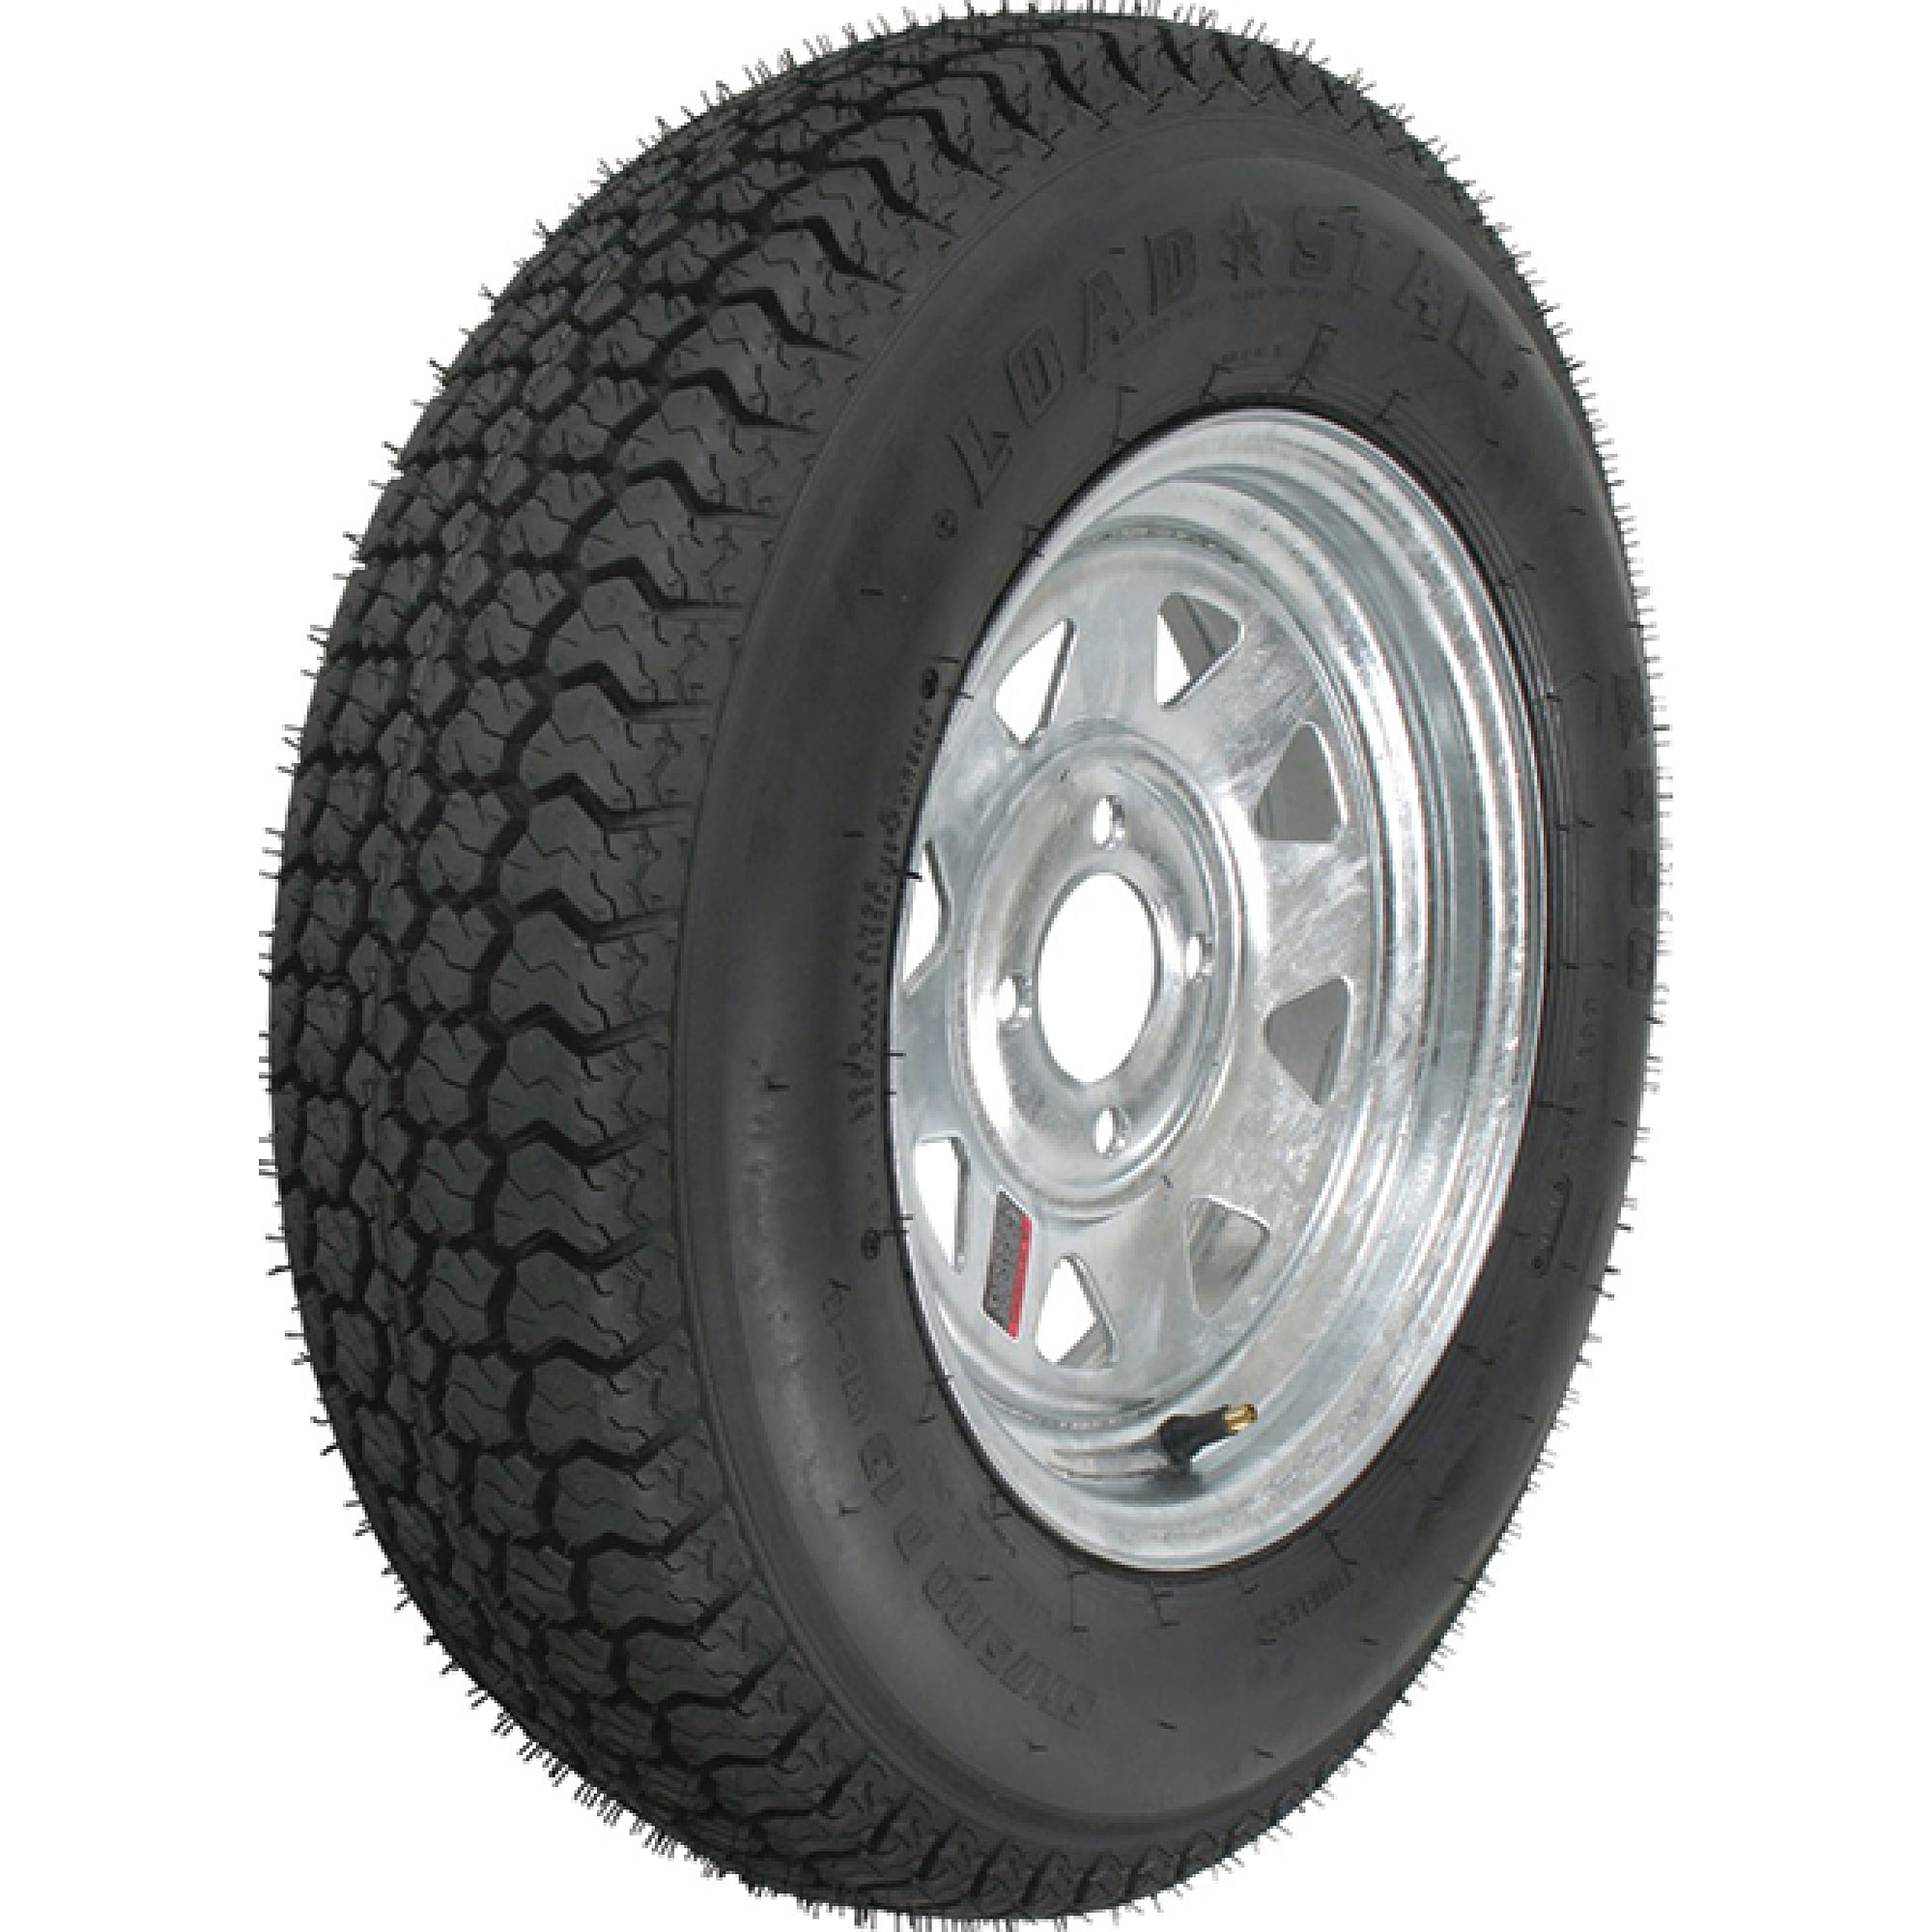 145R12 LRD 8 PR Kenda Karrier Radial Trailer Tire on 12 5 Lug Galvanized Spoke Wheel